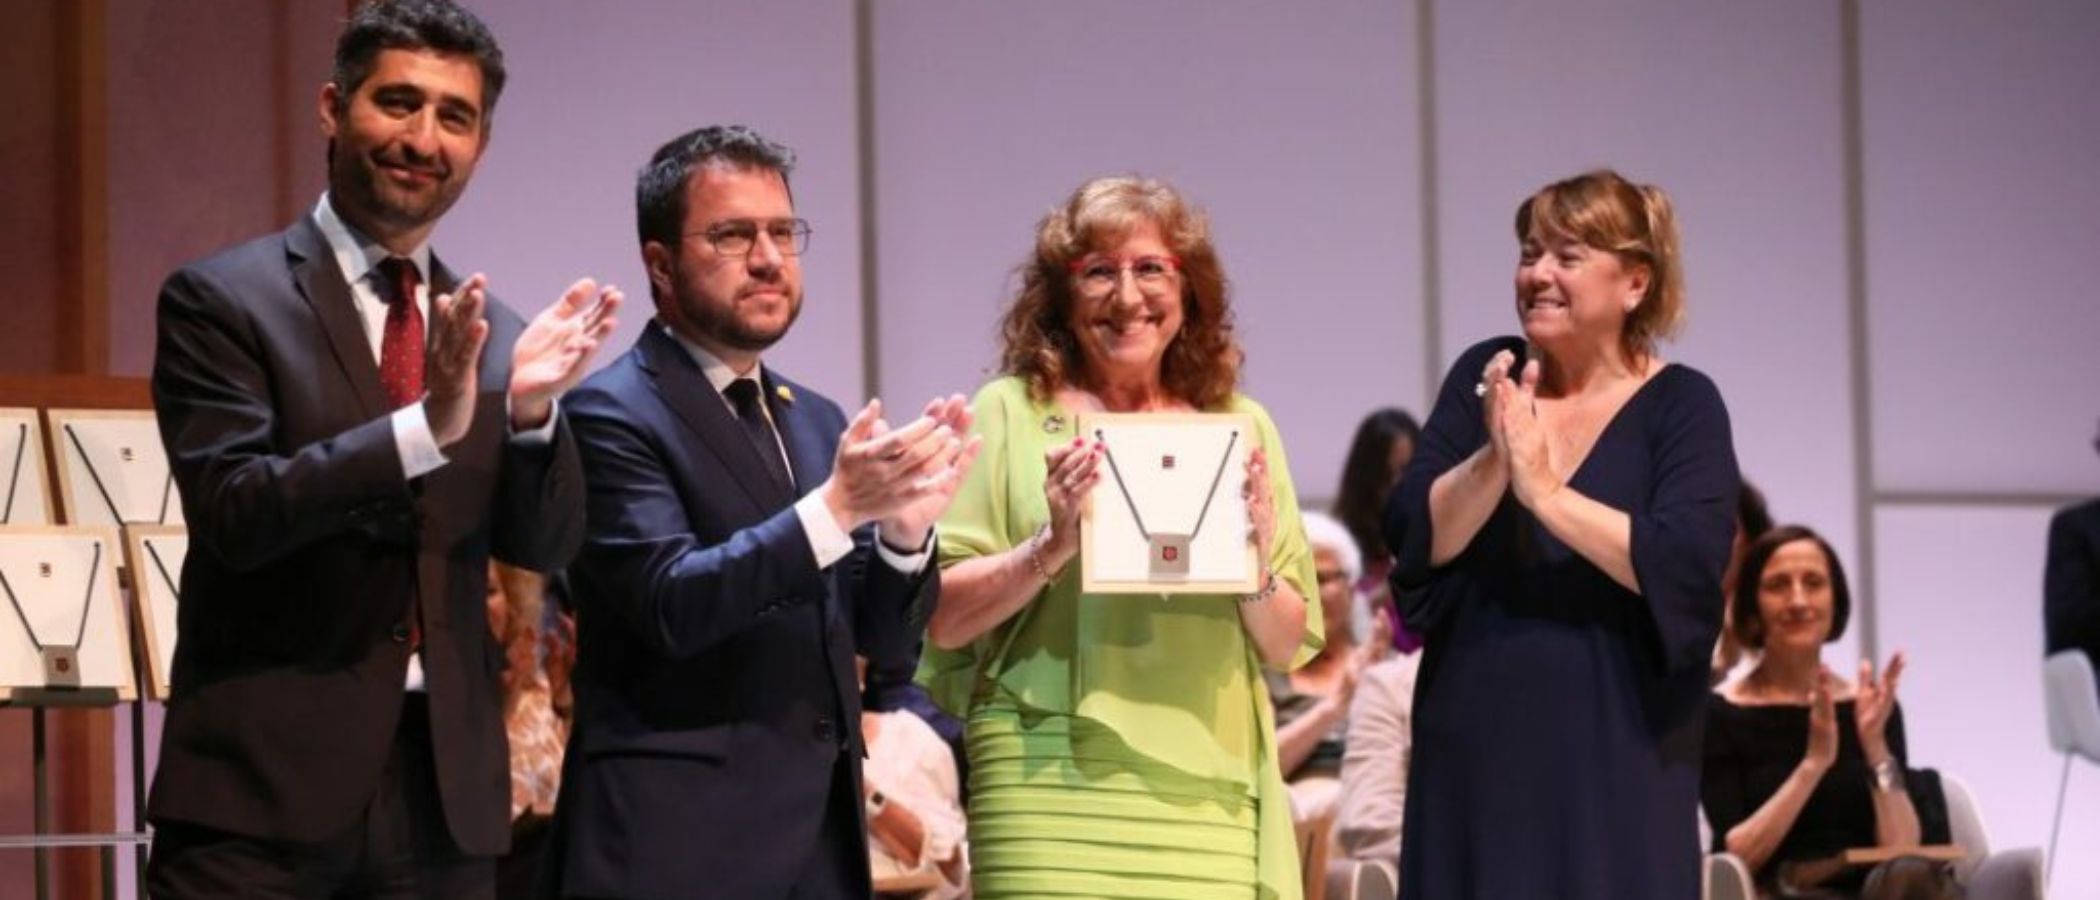 Prof. María Carmen Llasat rewarded with the Creu de Sant Jordi Award. 